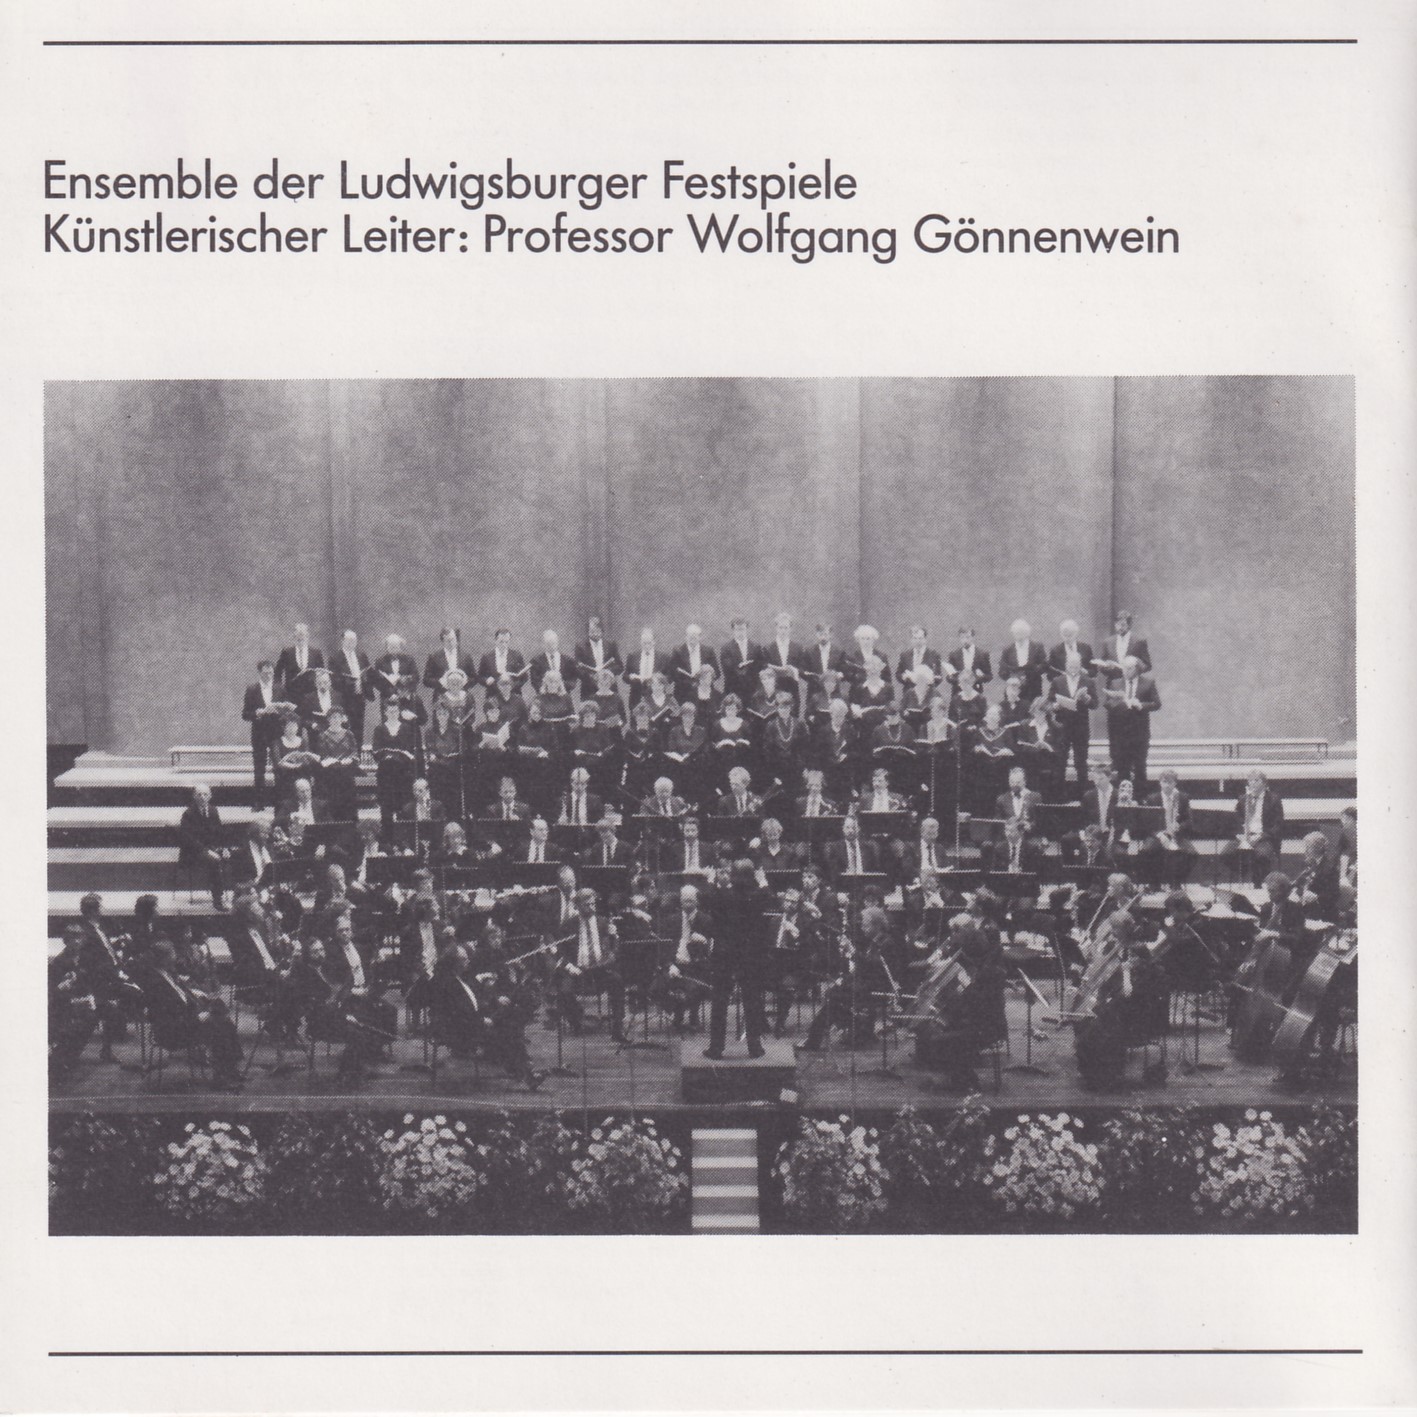 Mahler  / Strawinsky - Ludwigsburger Schlossfestspiele